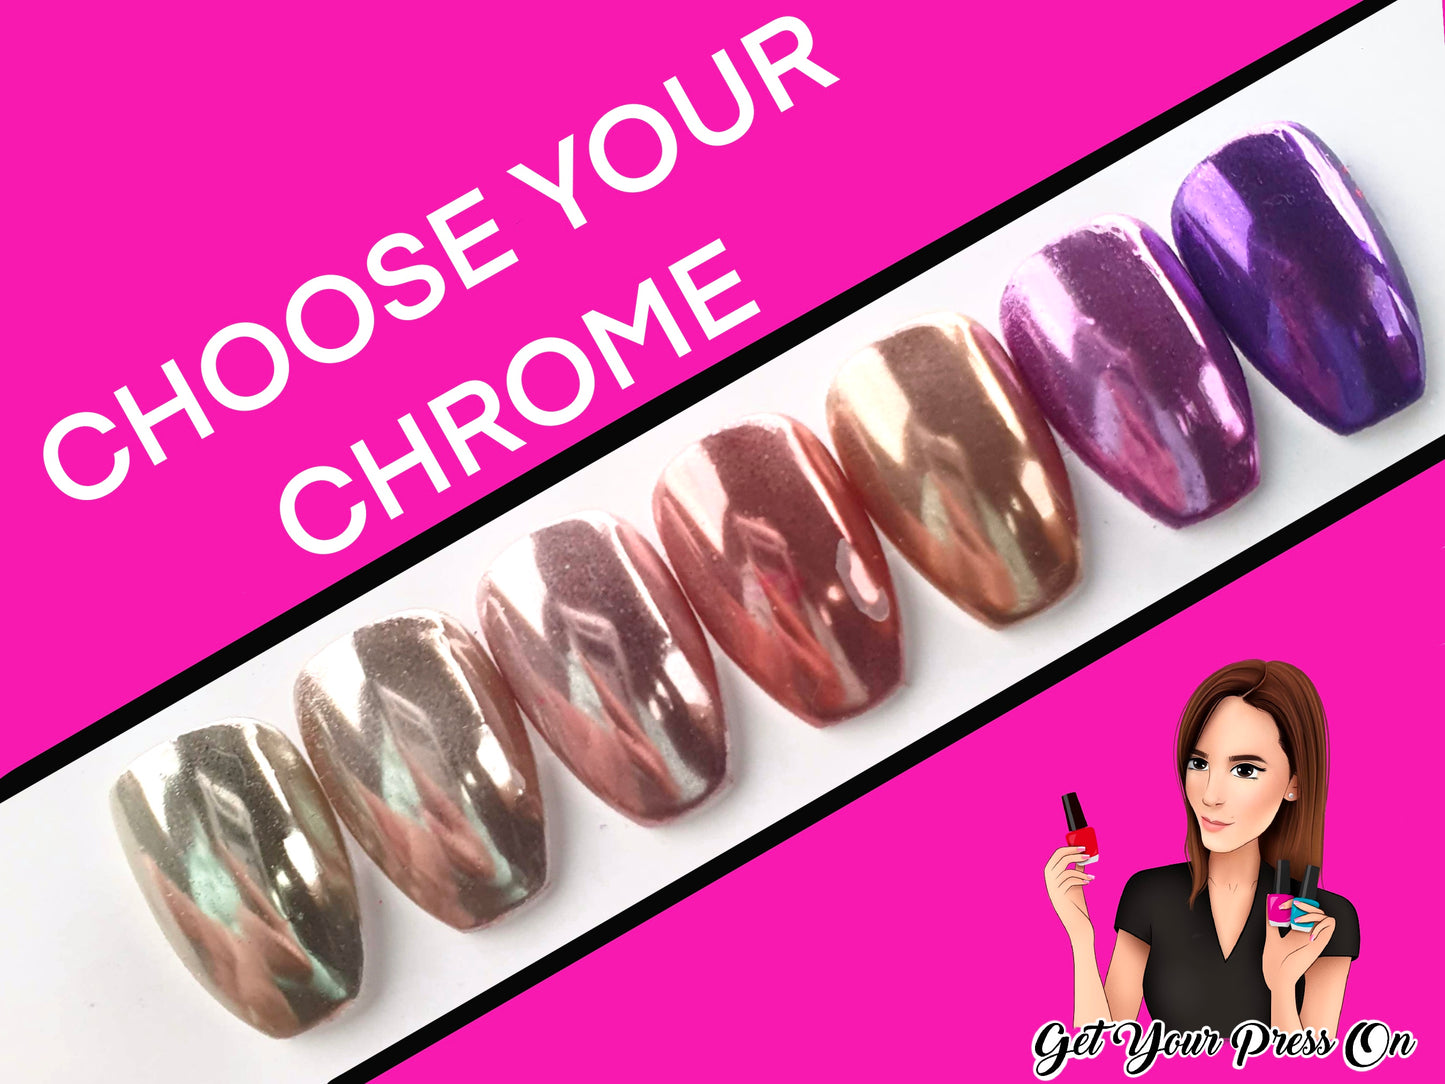 Chrome - You Choose! - Press-On Nails